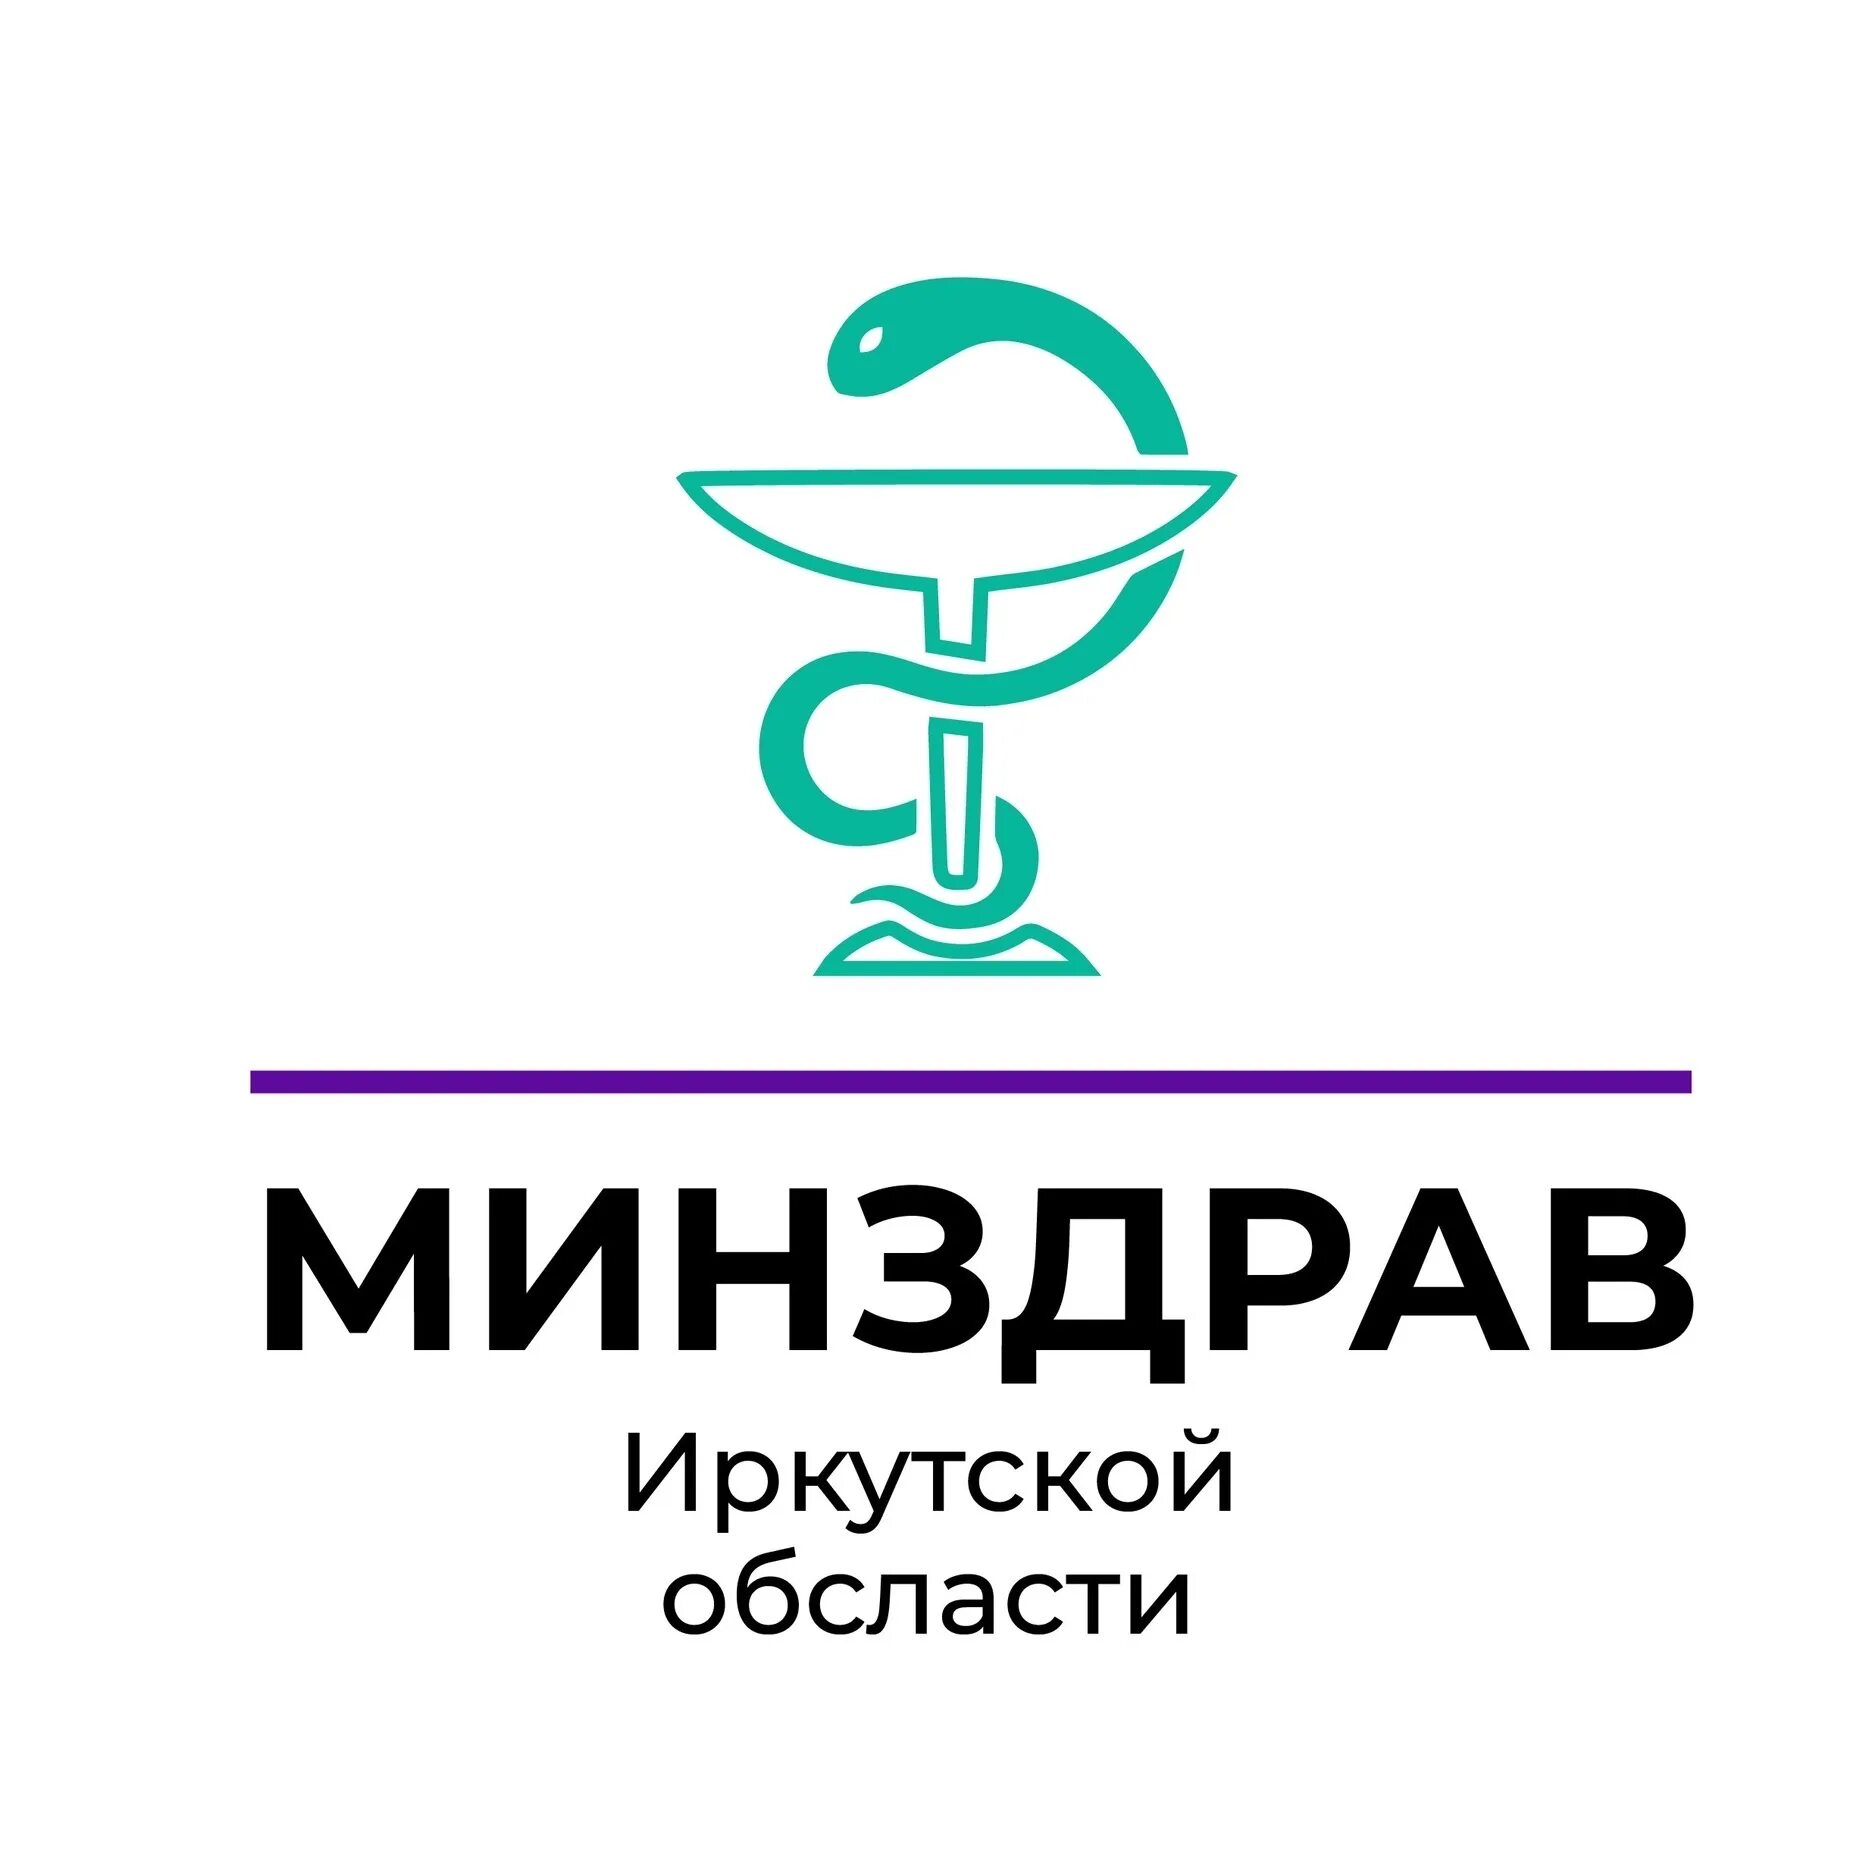 Министерство здравоохранения Иркутск. Минздрав Иркутской области лого. Телефон иркутского министерства здравоохранения